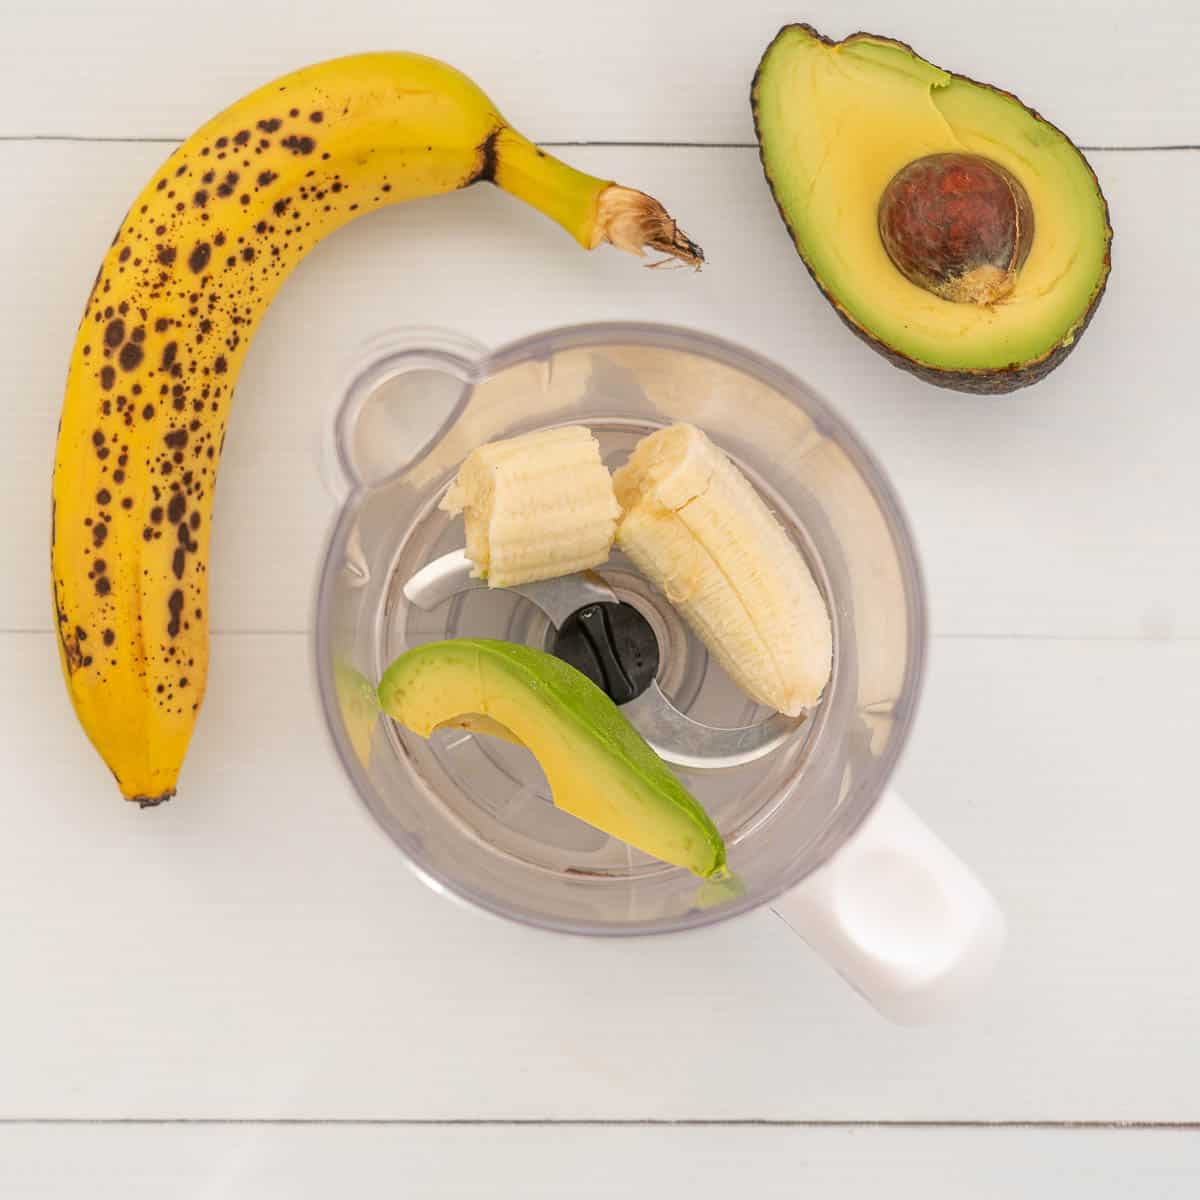 banana and avocado in a baby food blender